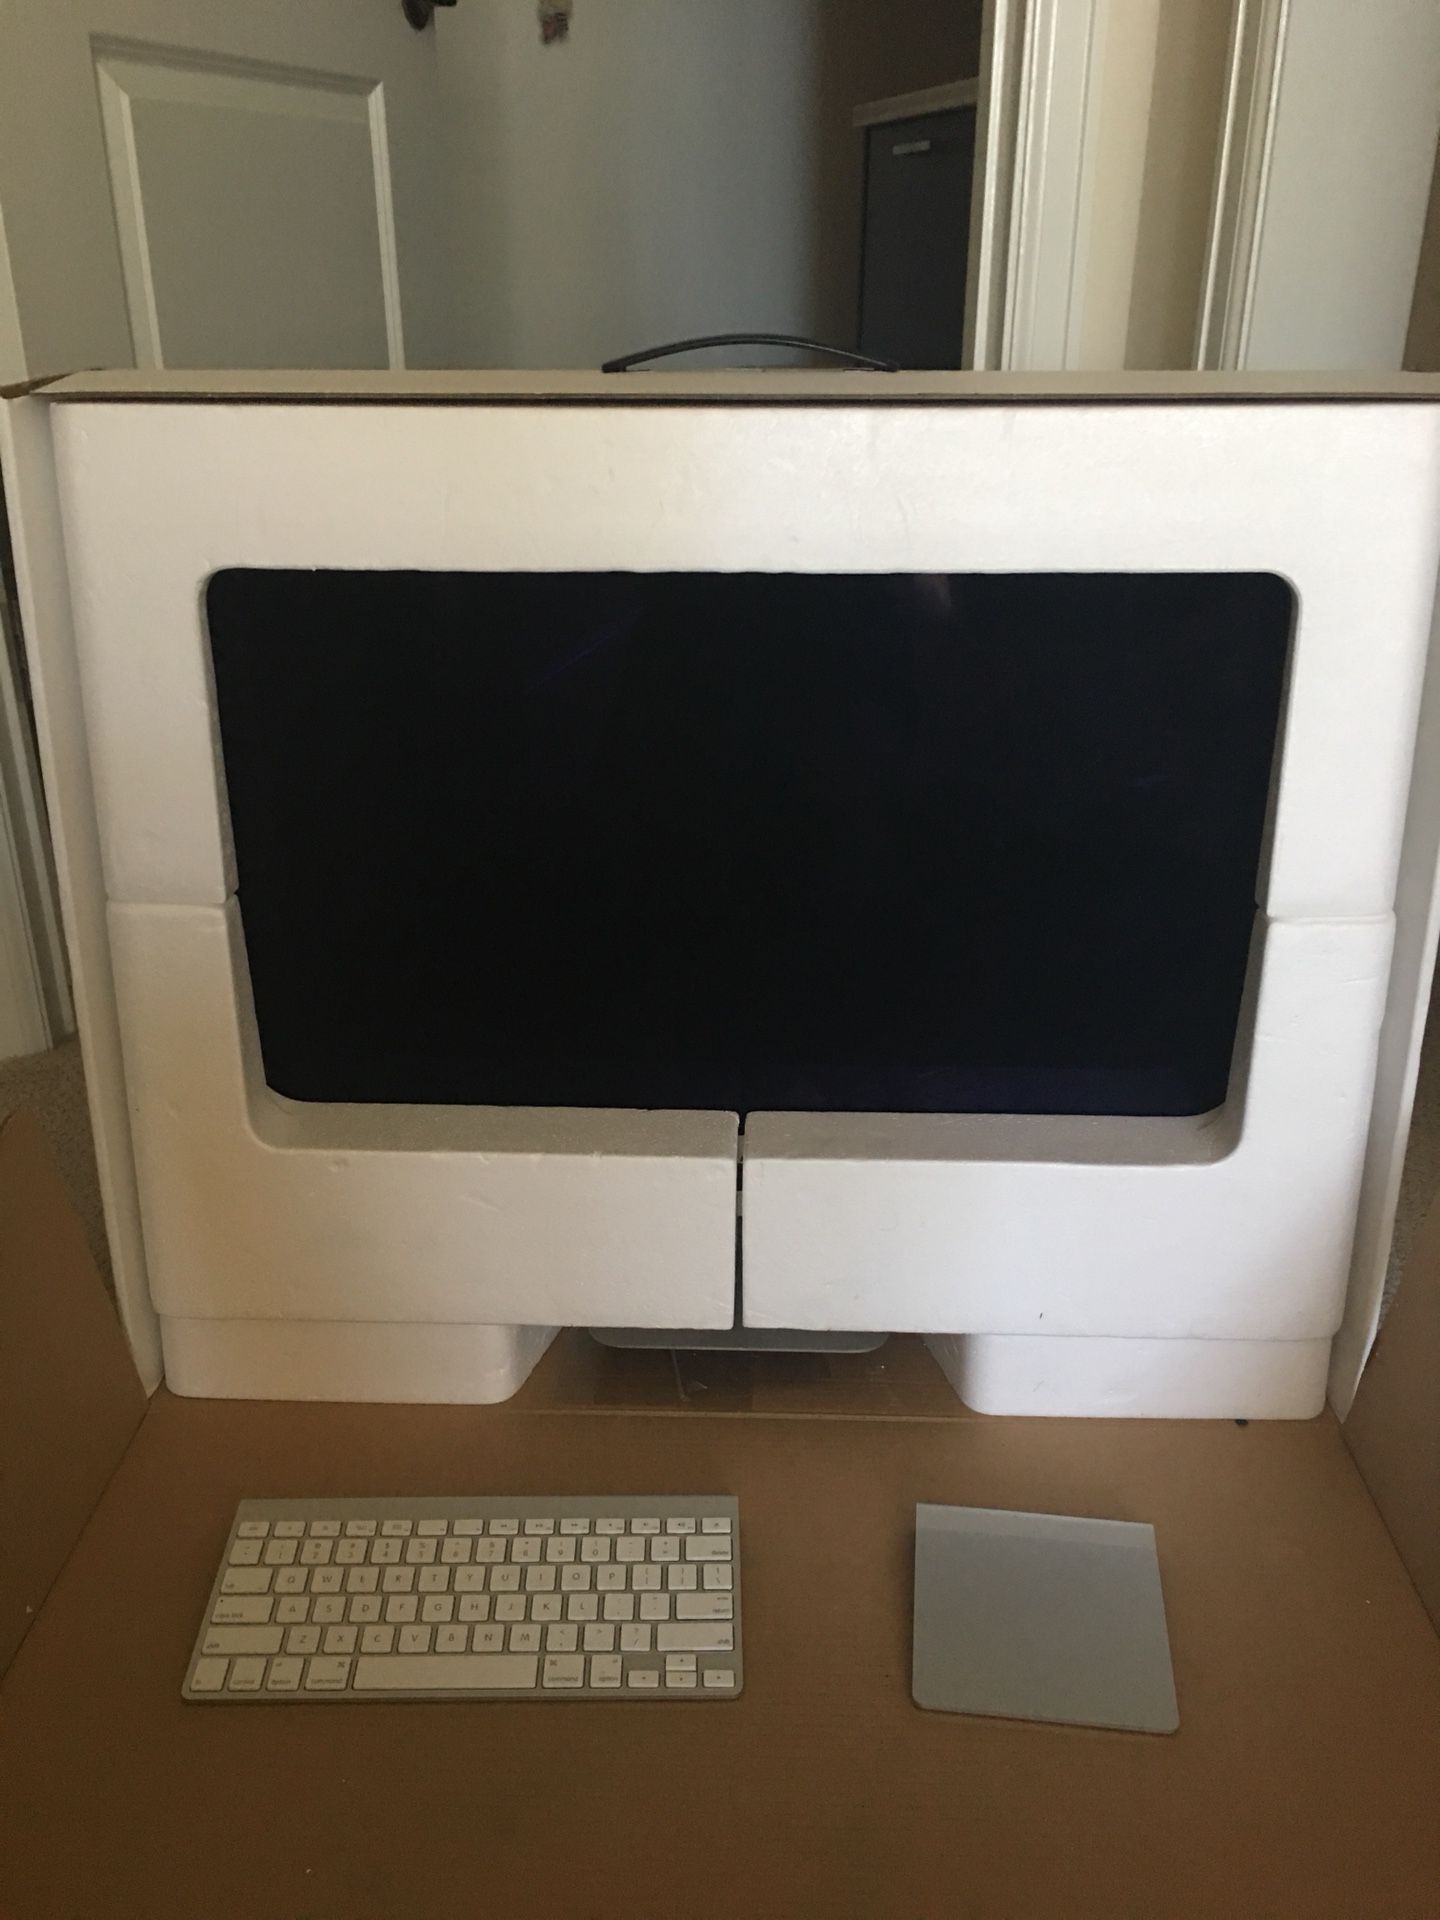 Apple IMAC 27 inch Desktop Computer- LIKE NEW IN BOX